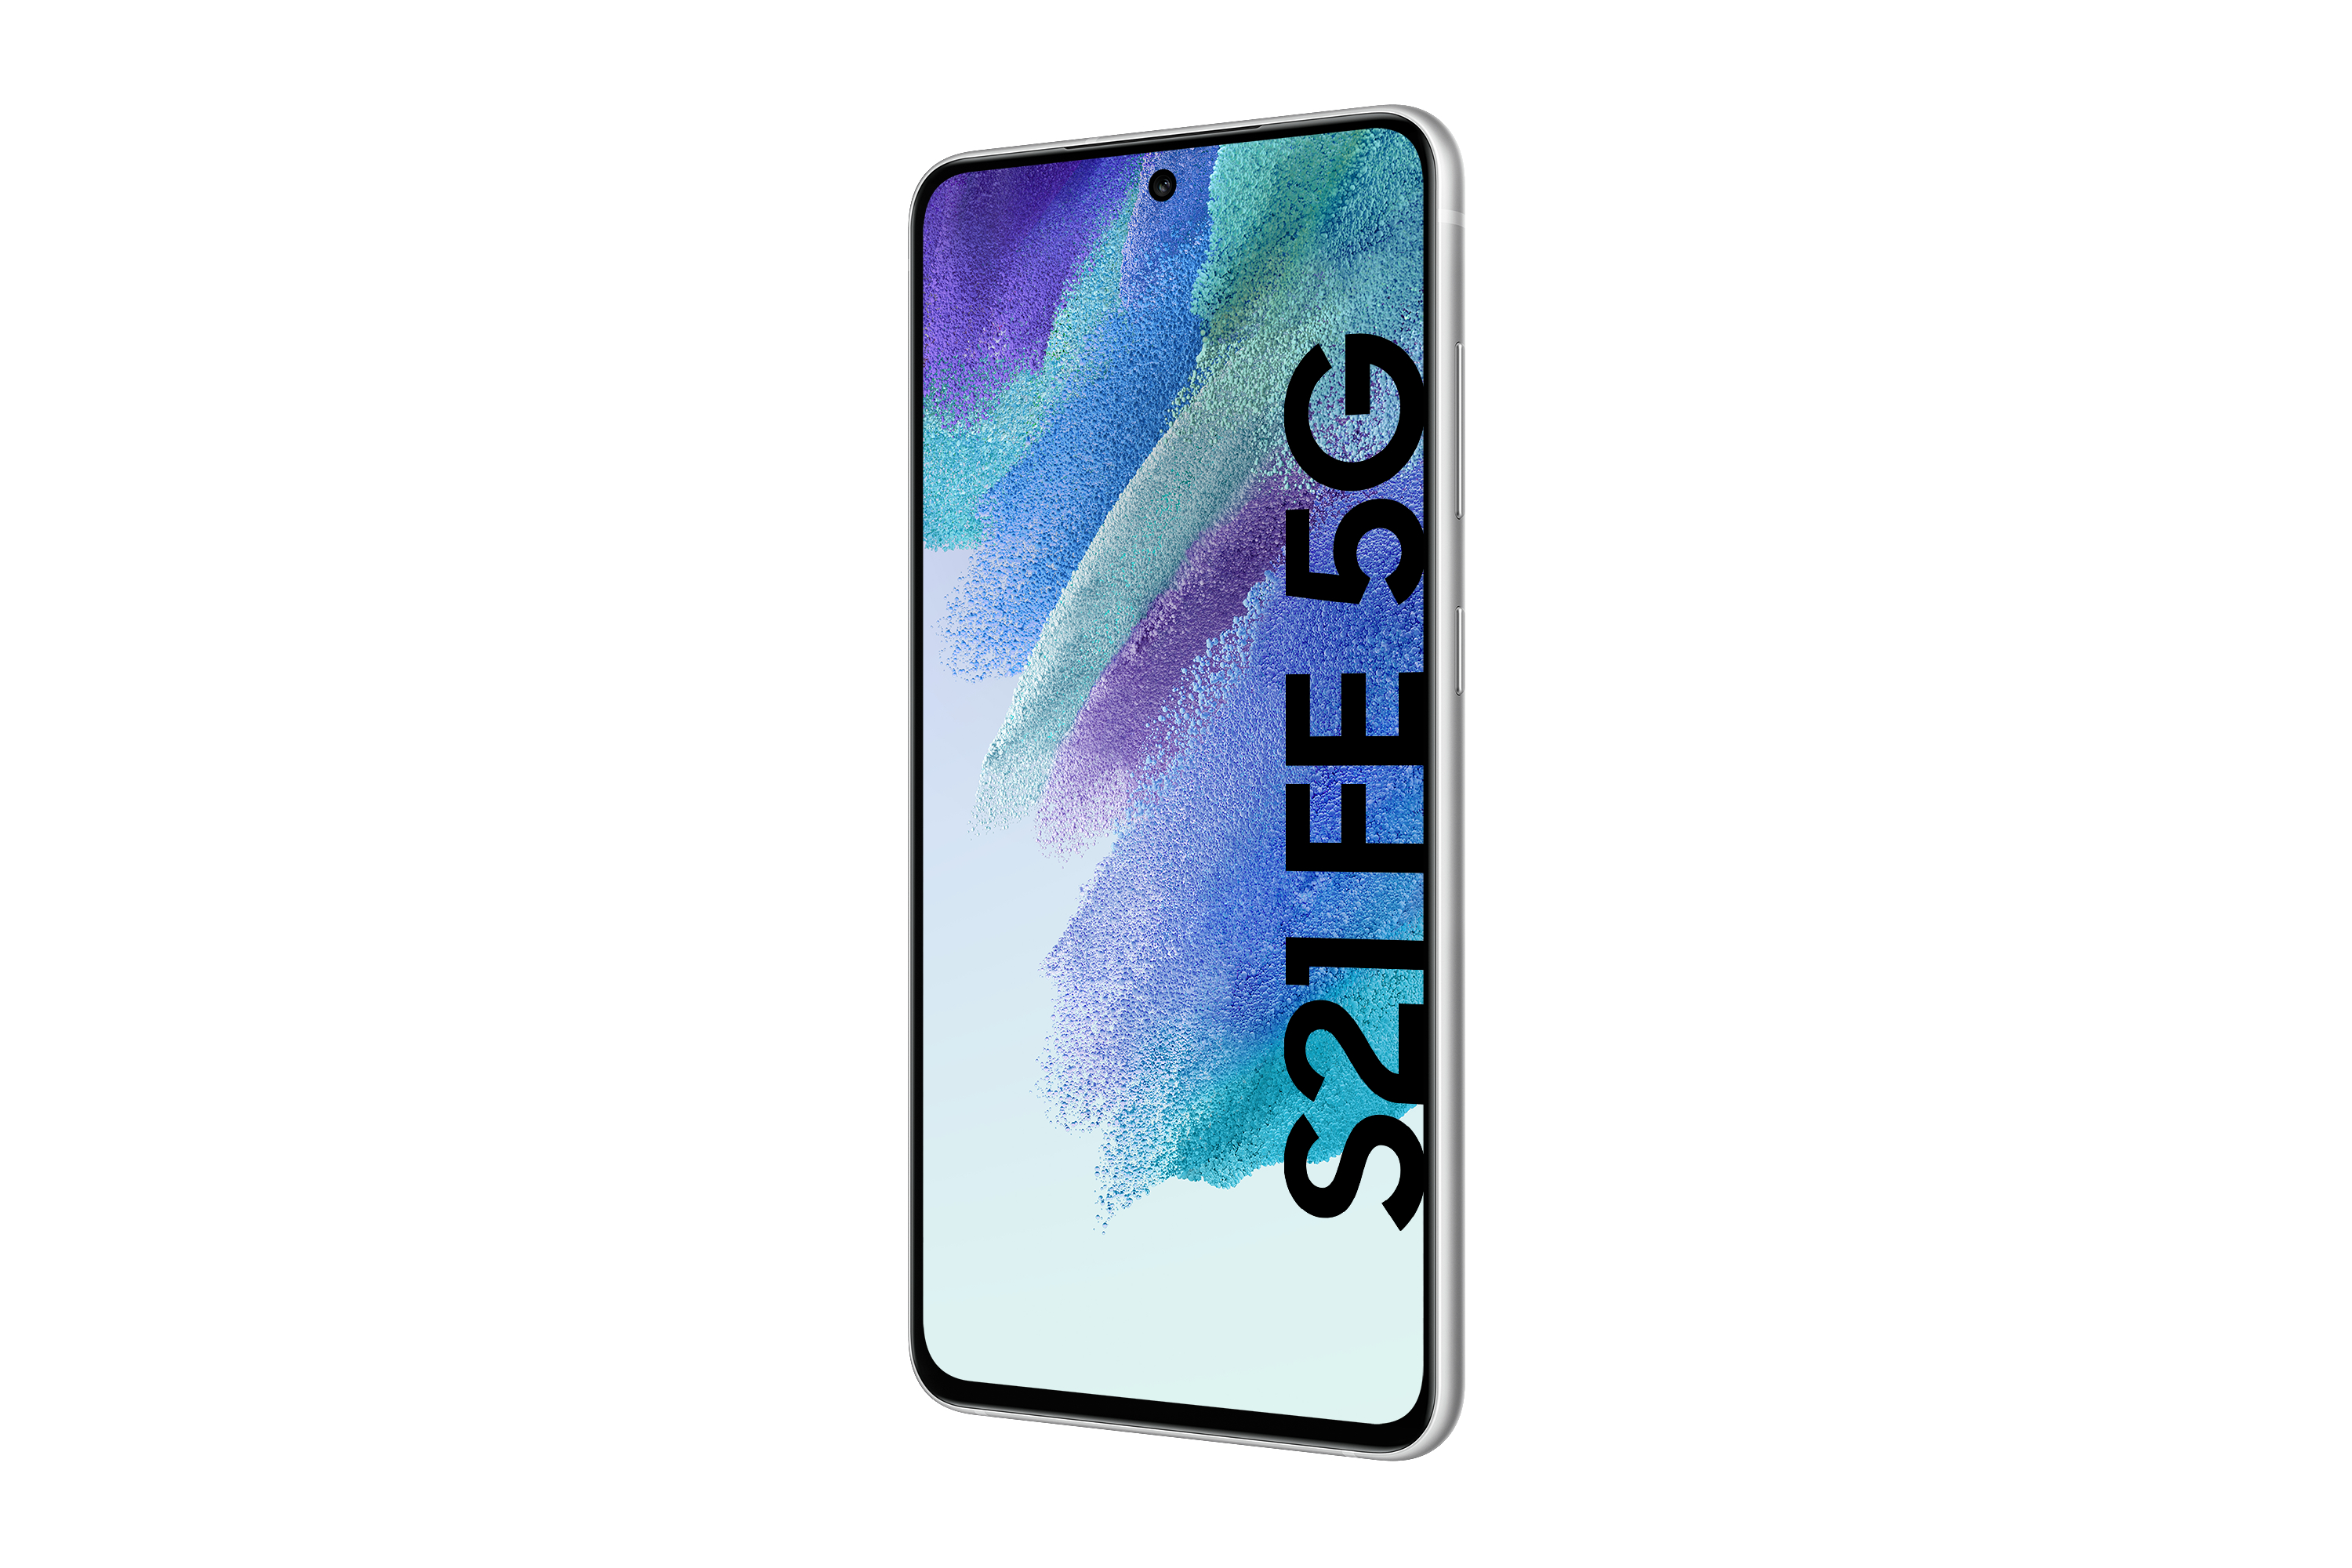 SAMSUNG Galaxy S21 FE 5G GB White 256 Dual SIM